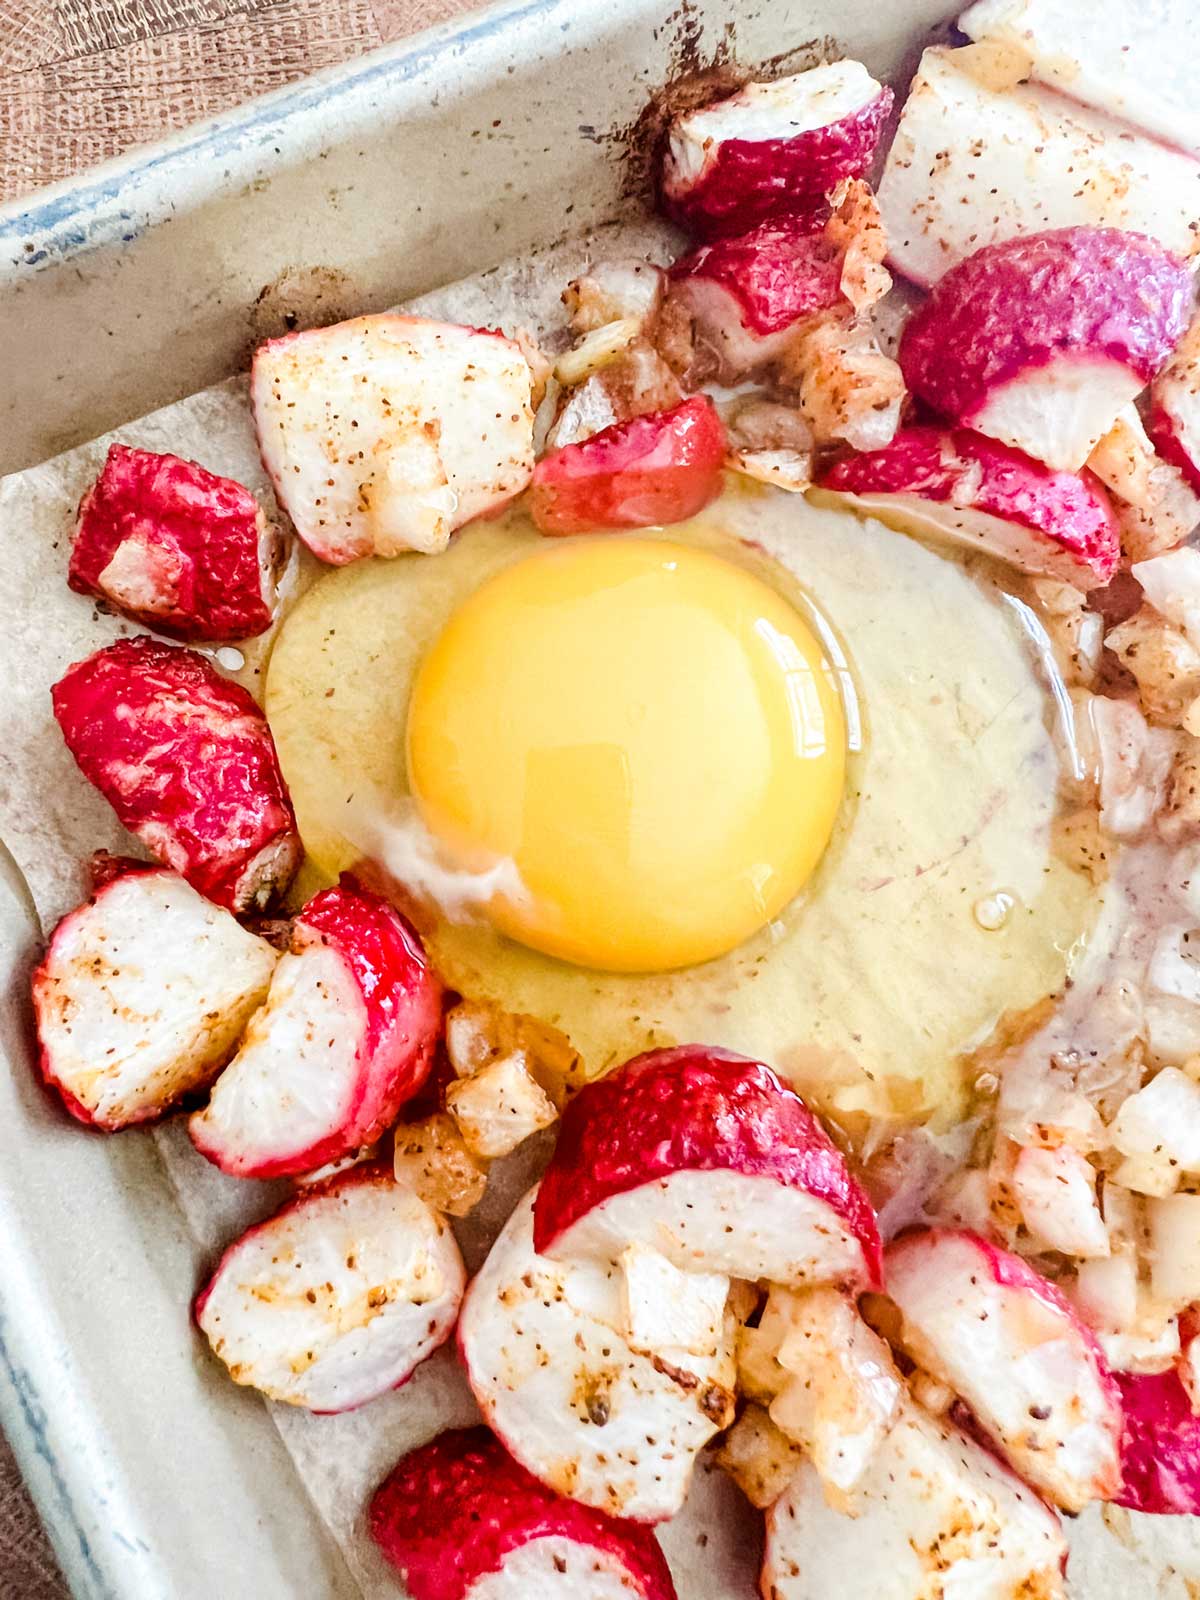 Sheet pan with radish, onion, and egg.